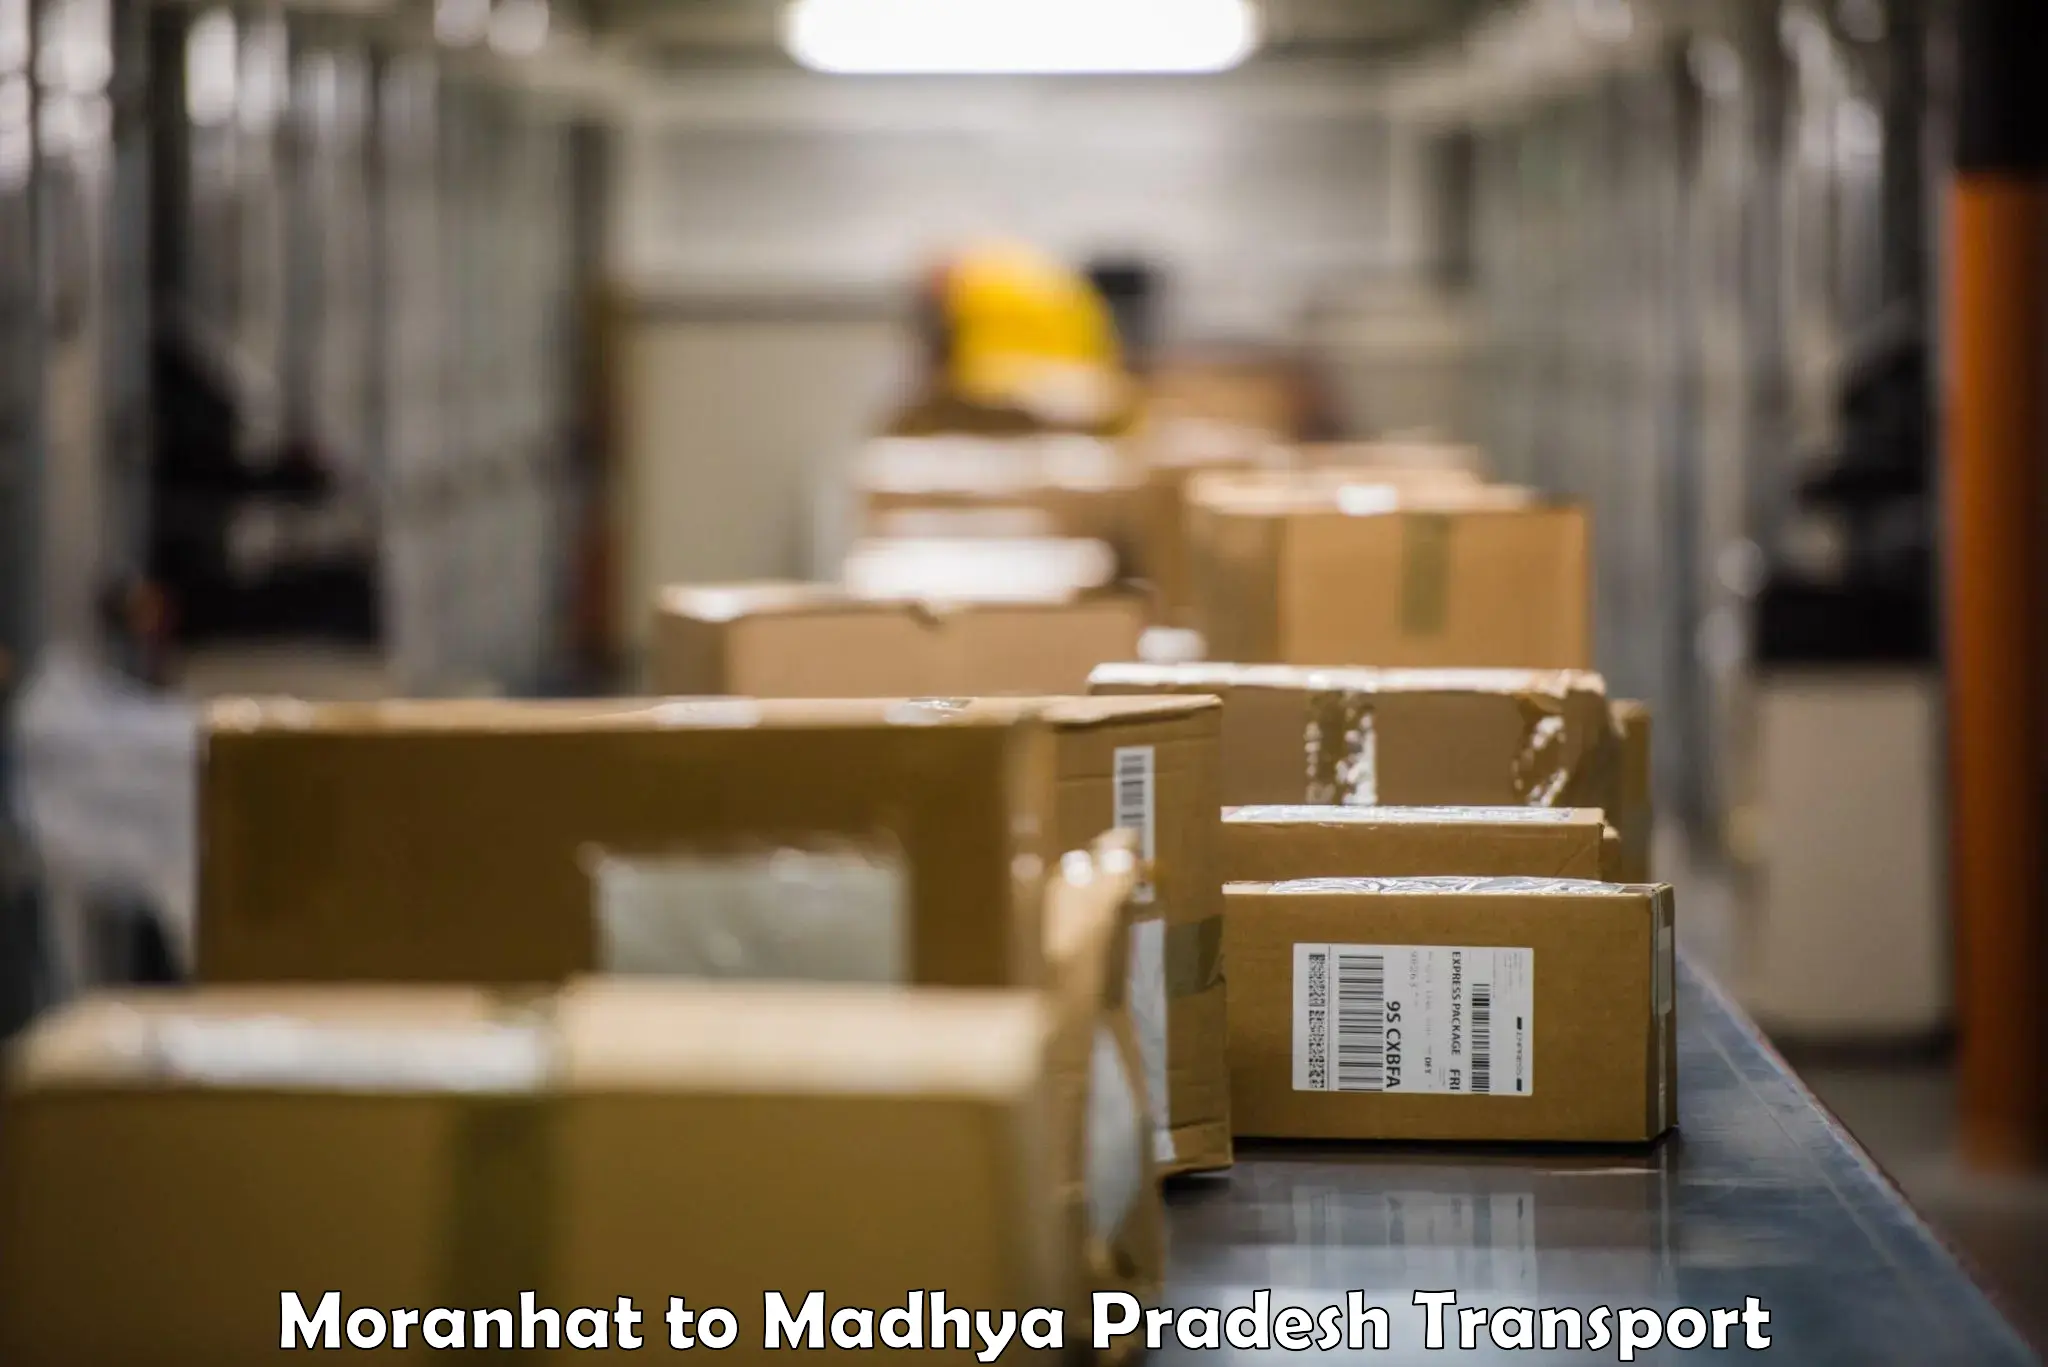 Container transport service Moranhat to Garoth